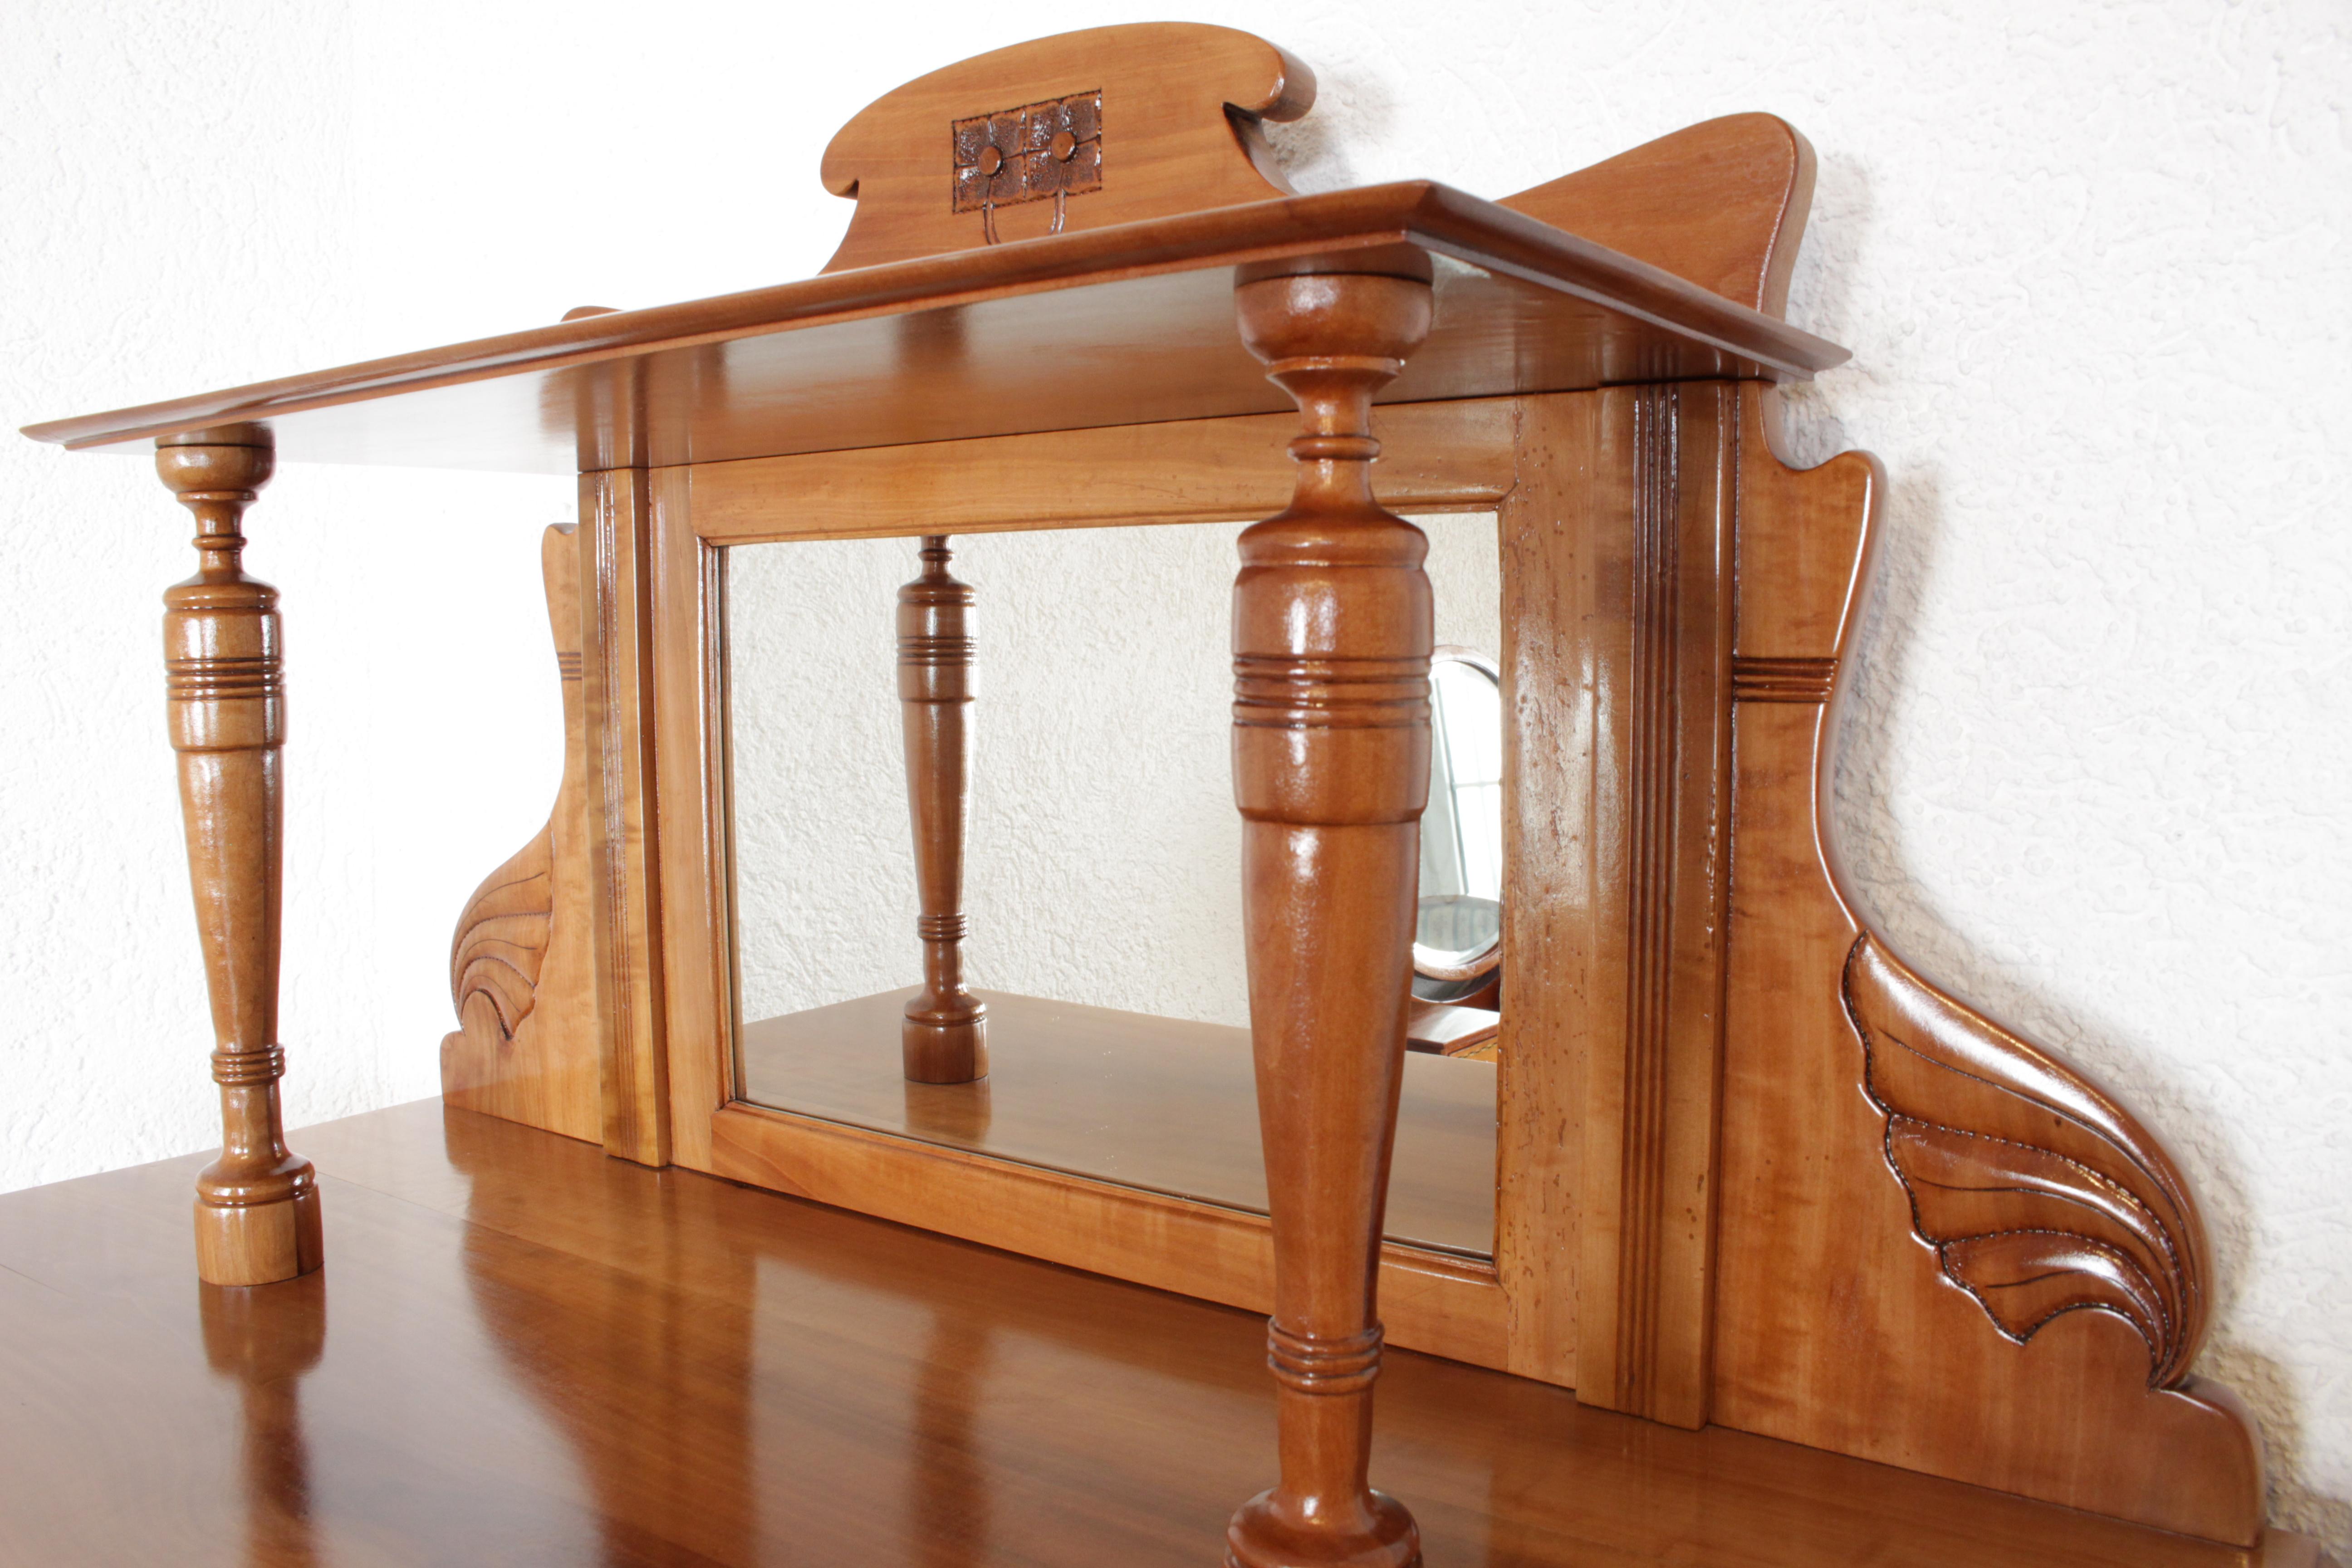 Late 19th Century Art Nouveau Plum-Wood Cabinet or Vertiko (Deutsch)